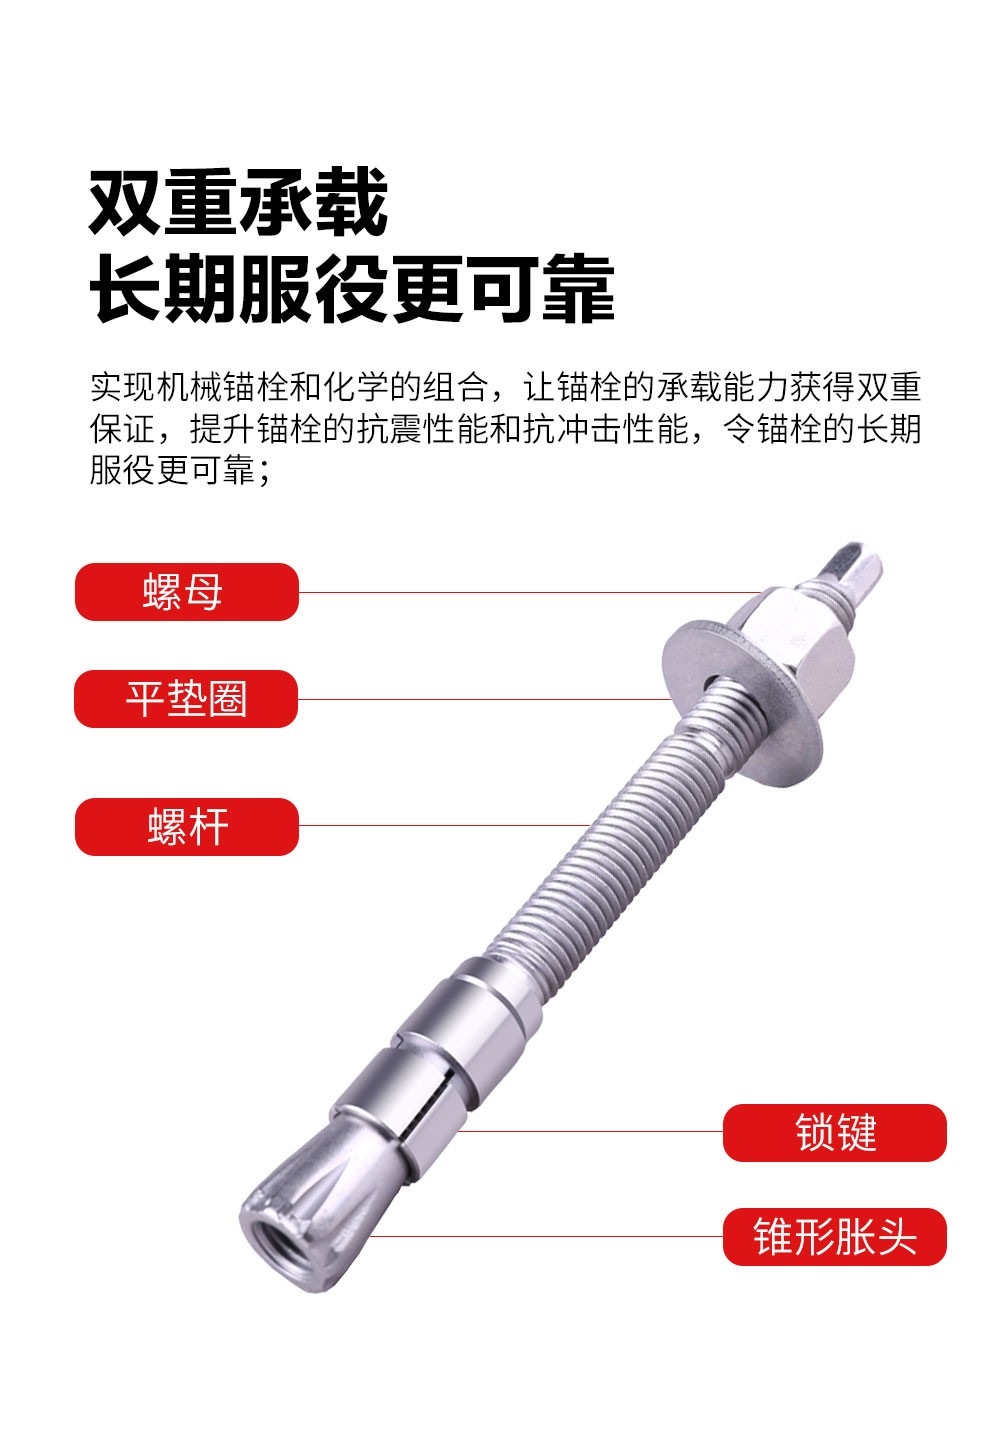 NJMKT抗震胶粘模扩底机械锚栓 (3)